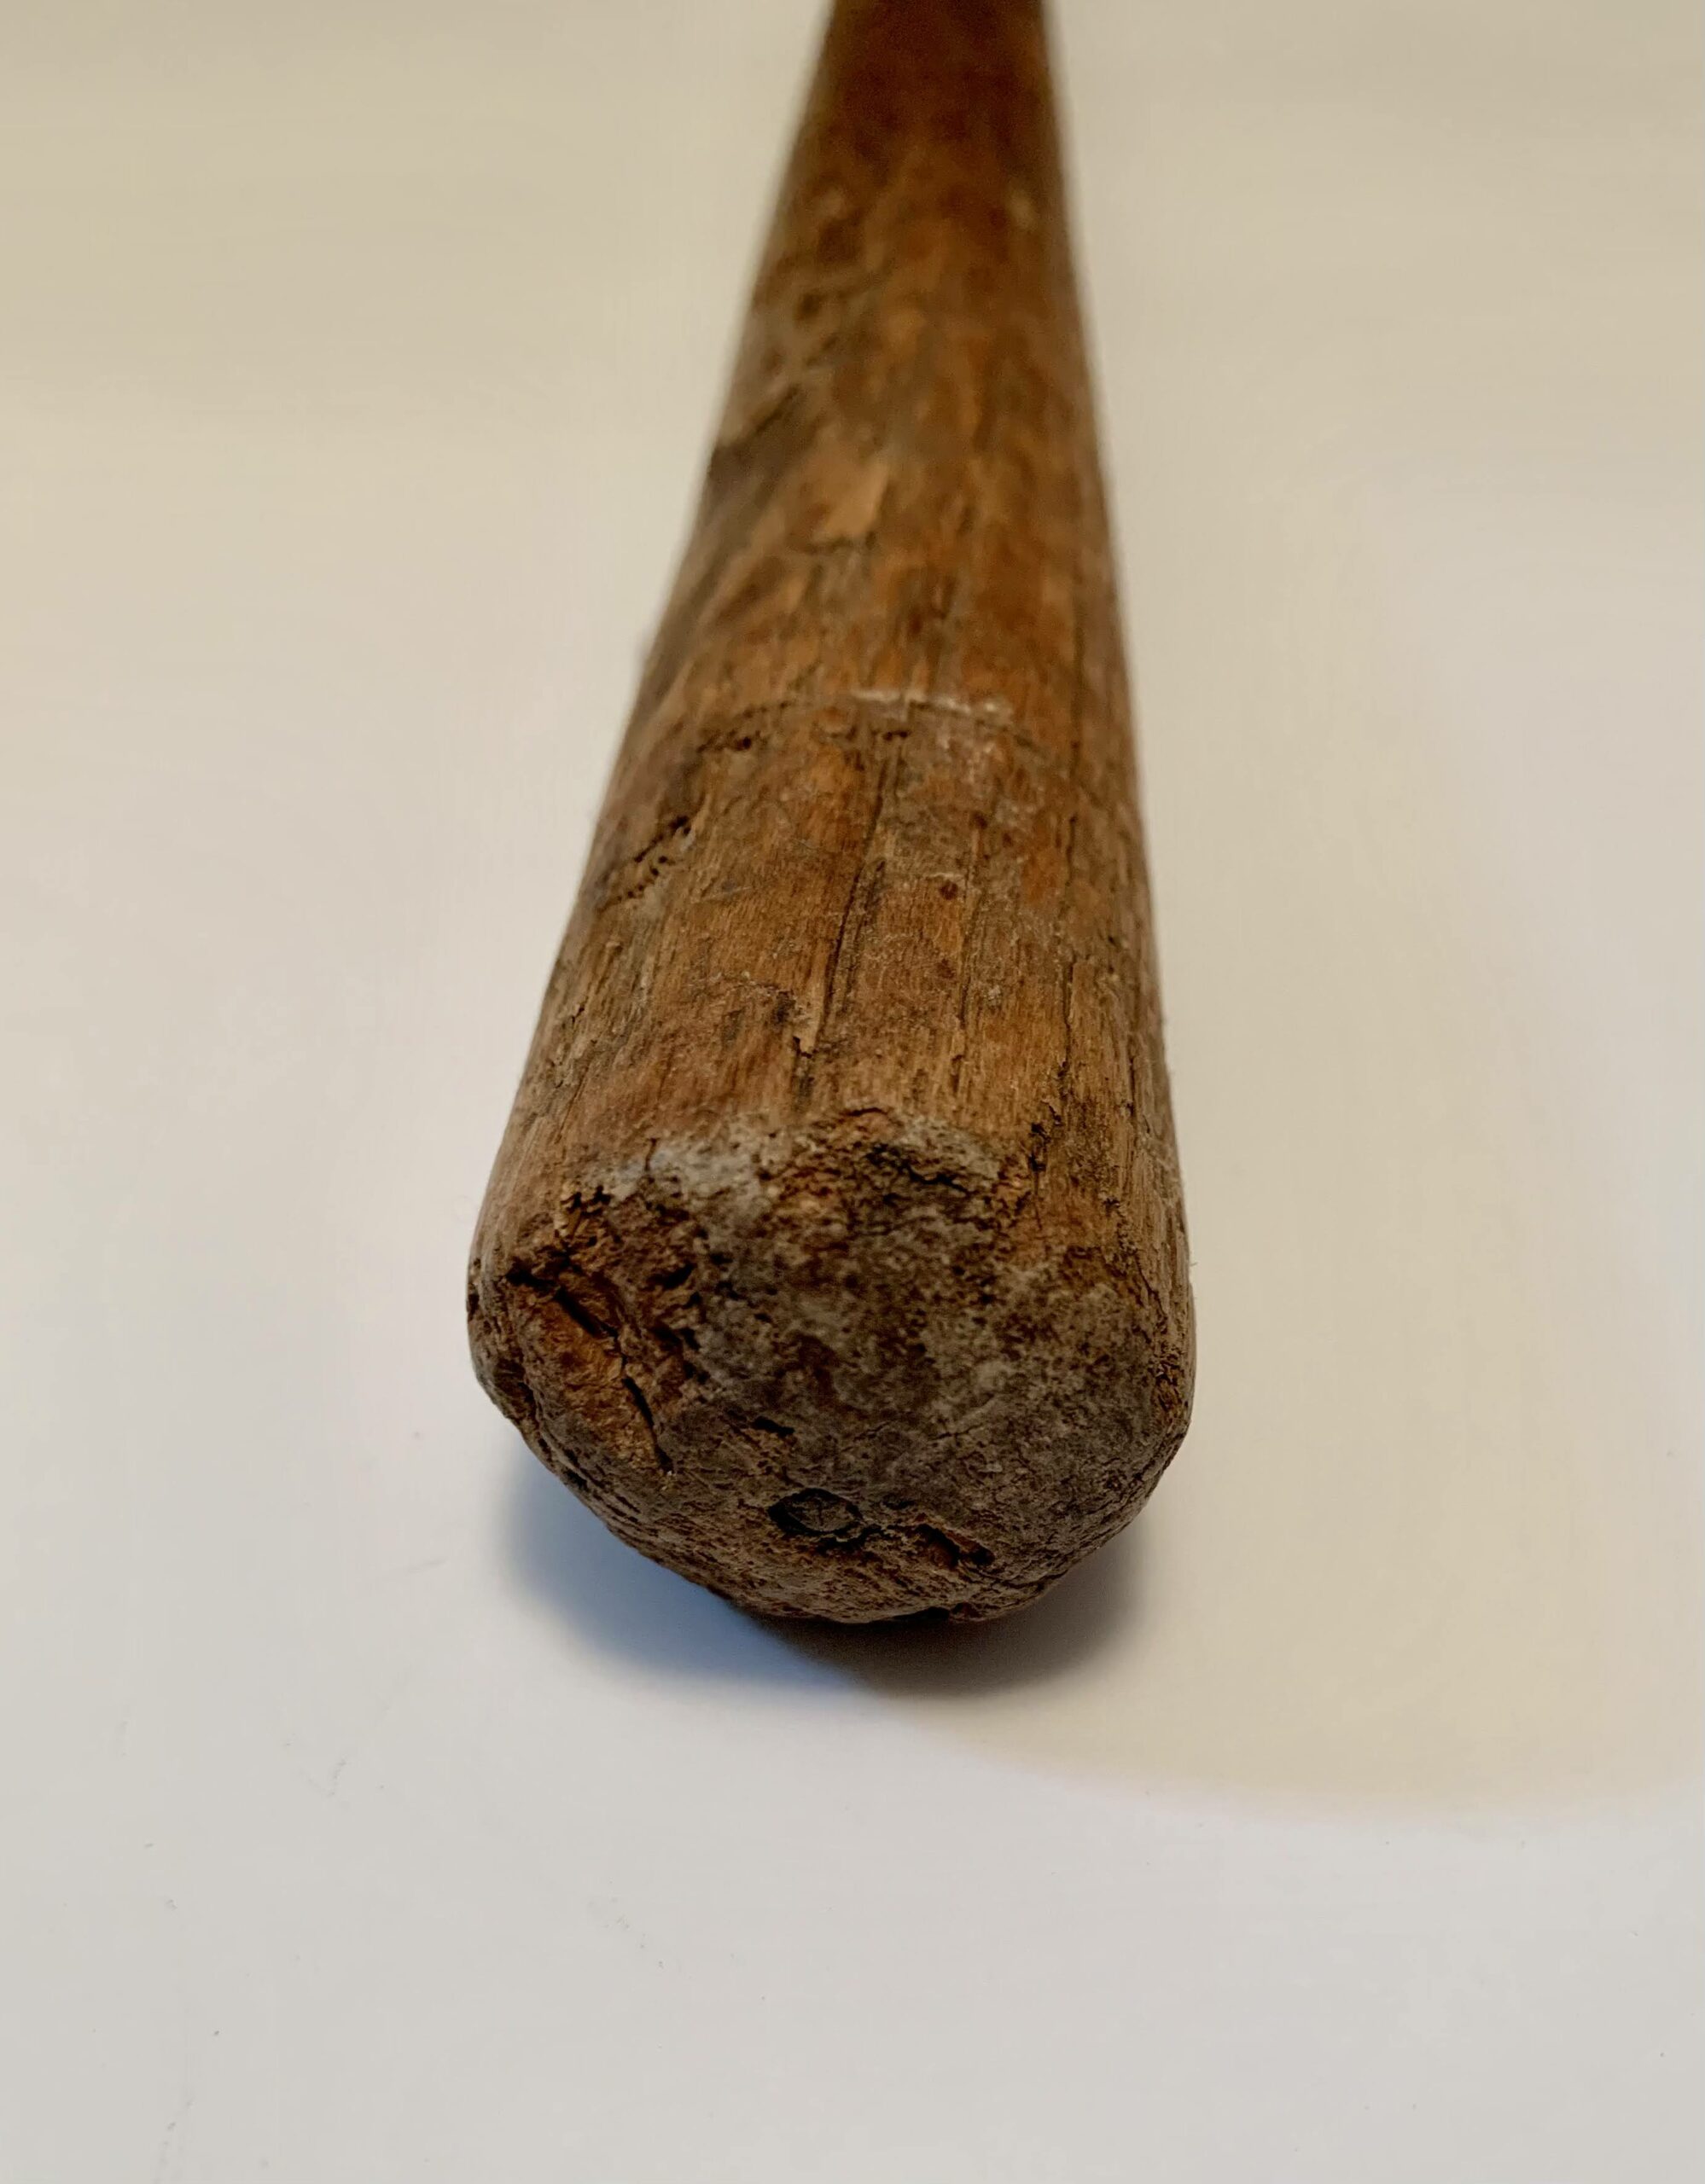 vintage baseball bat logo